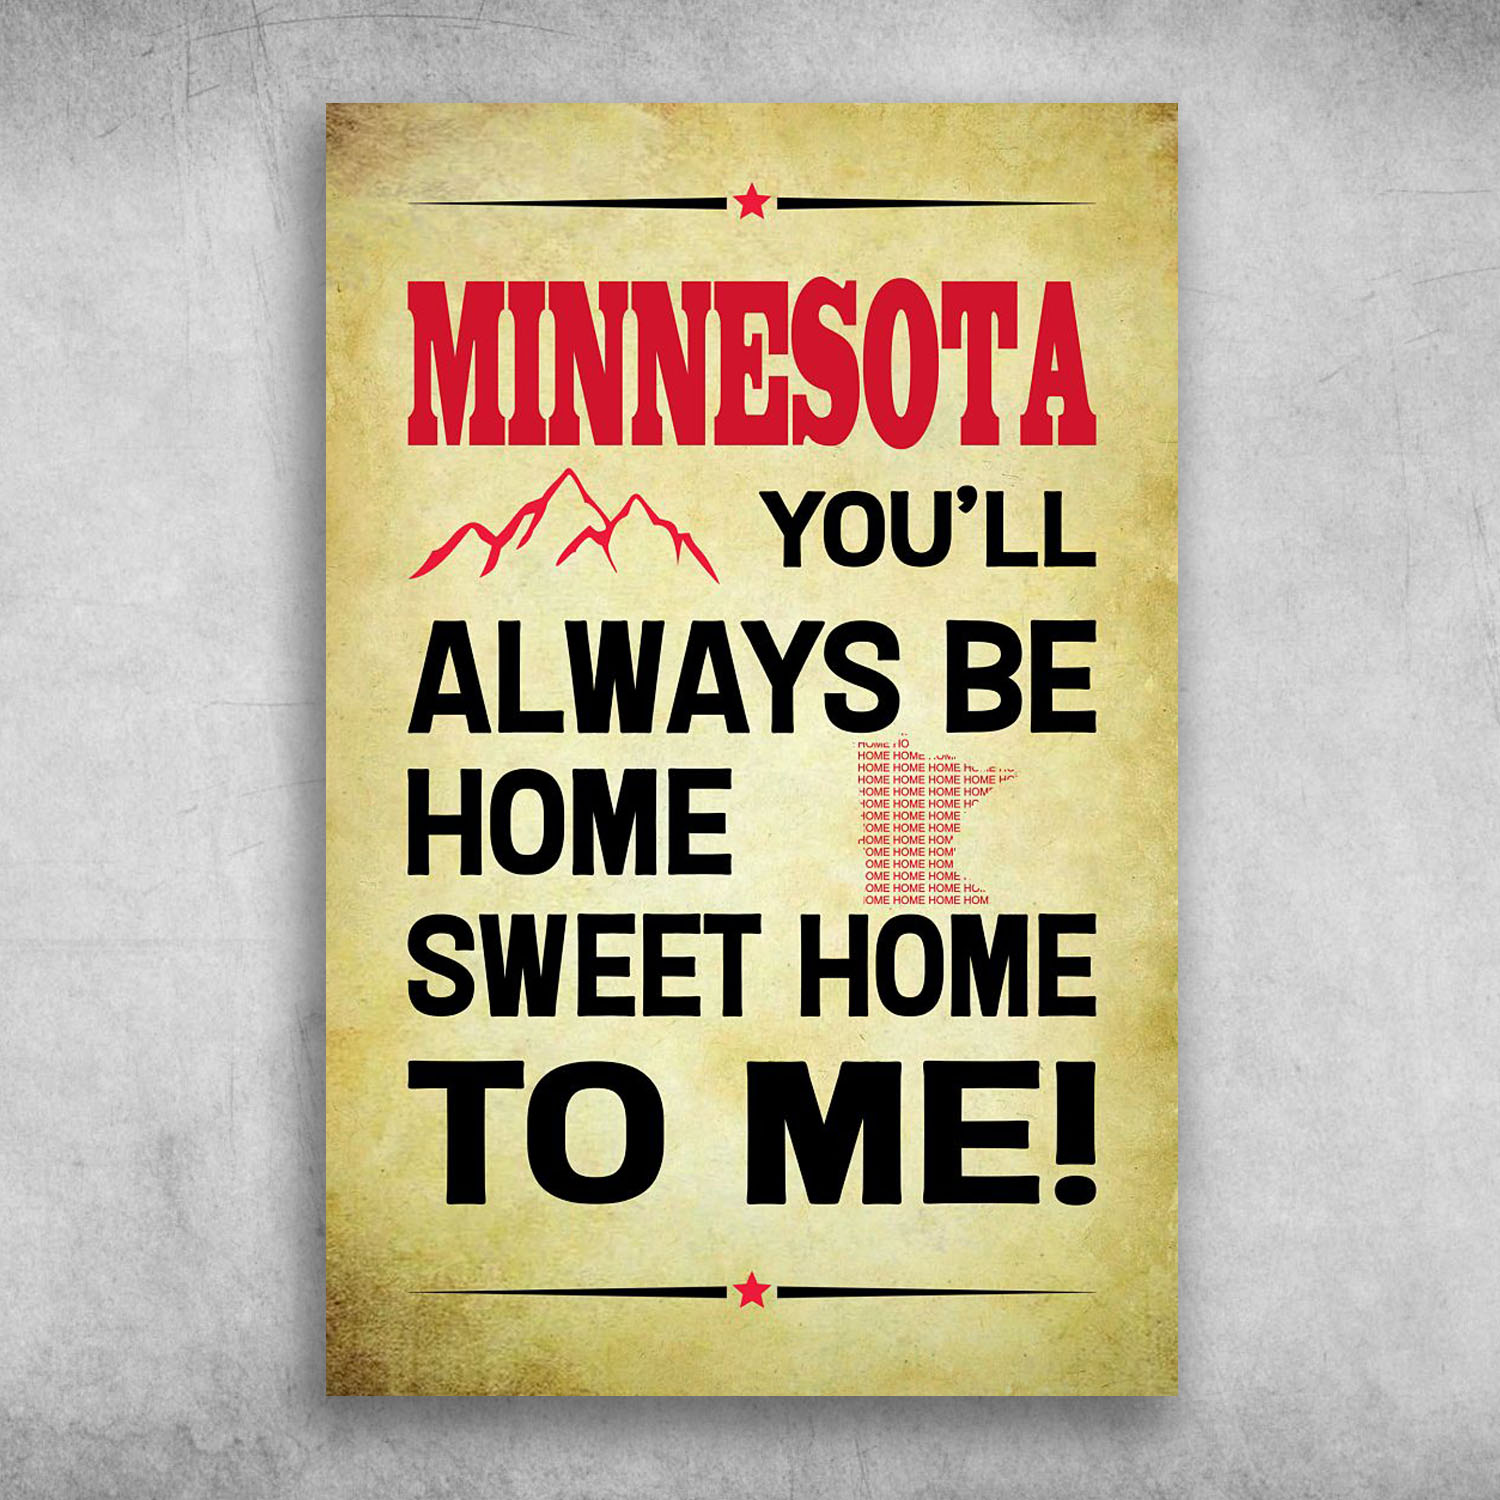 Minnesota You'll Always Be Home Sweet Home To Me